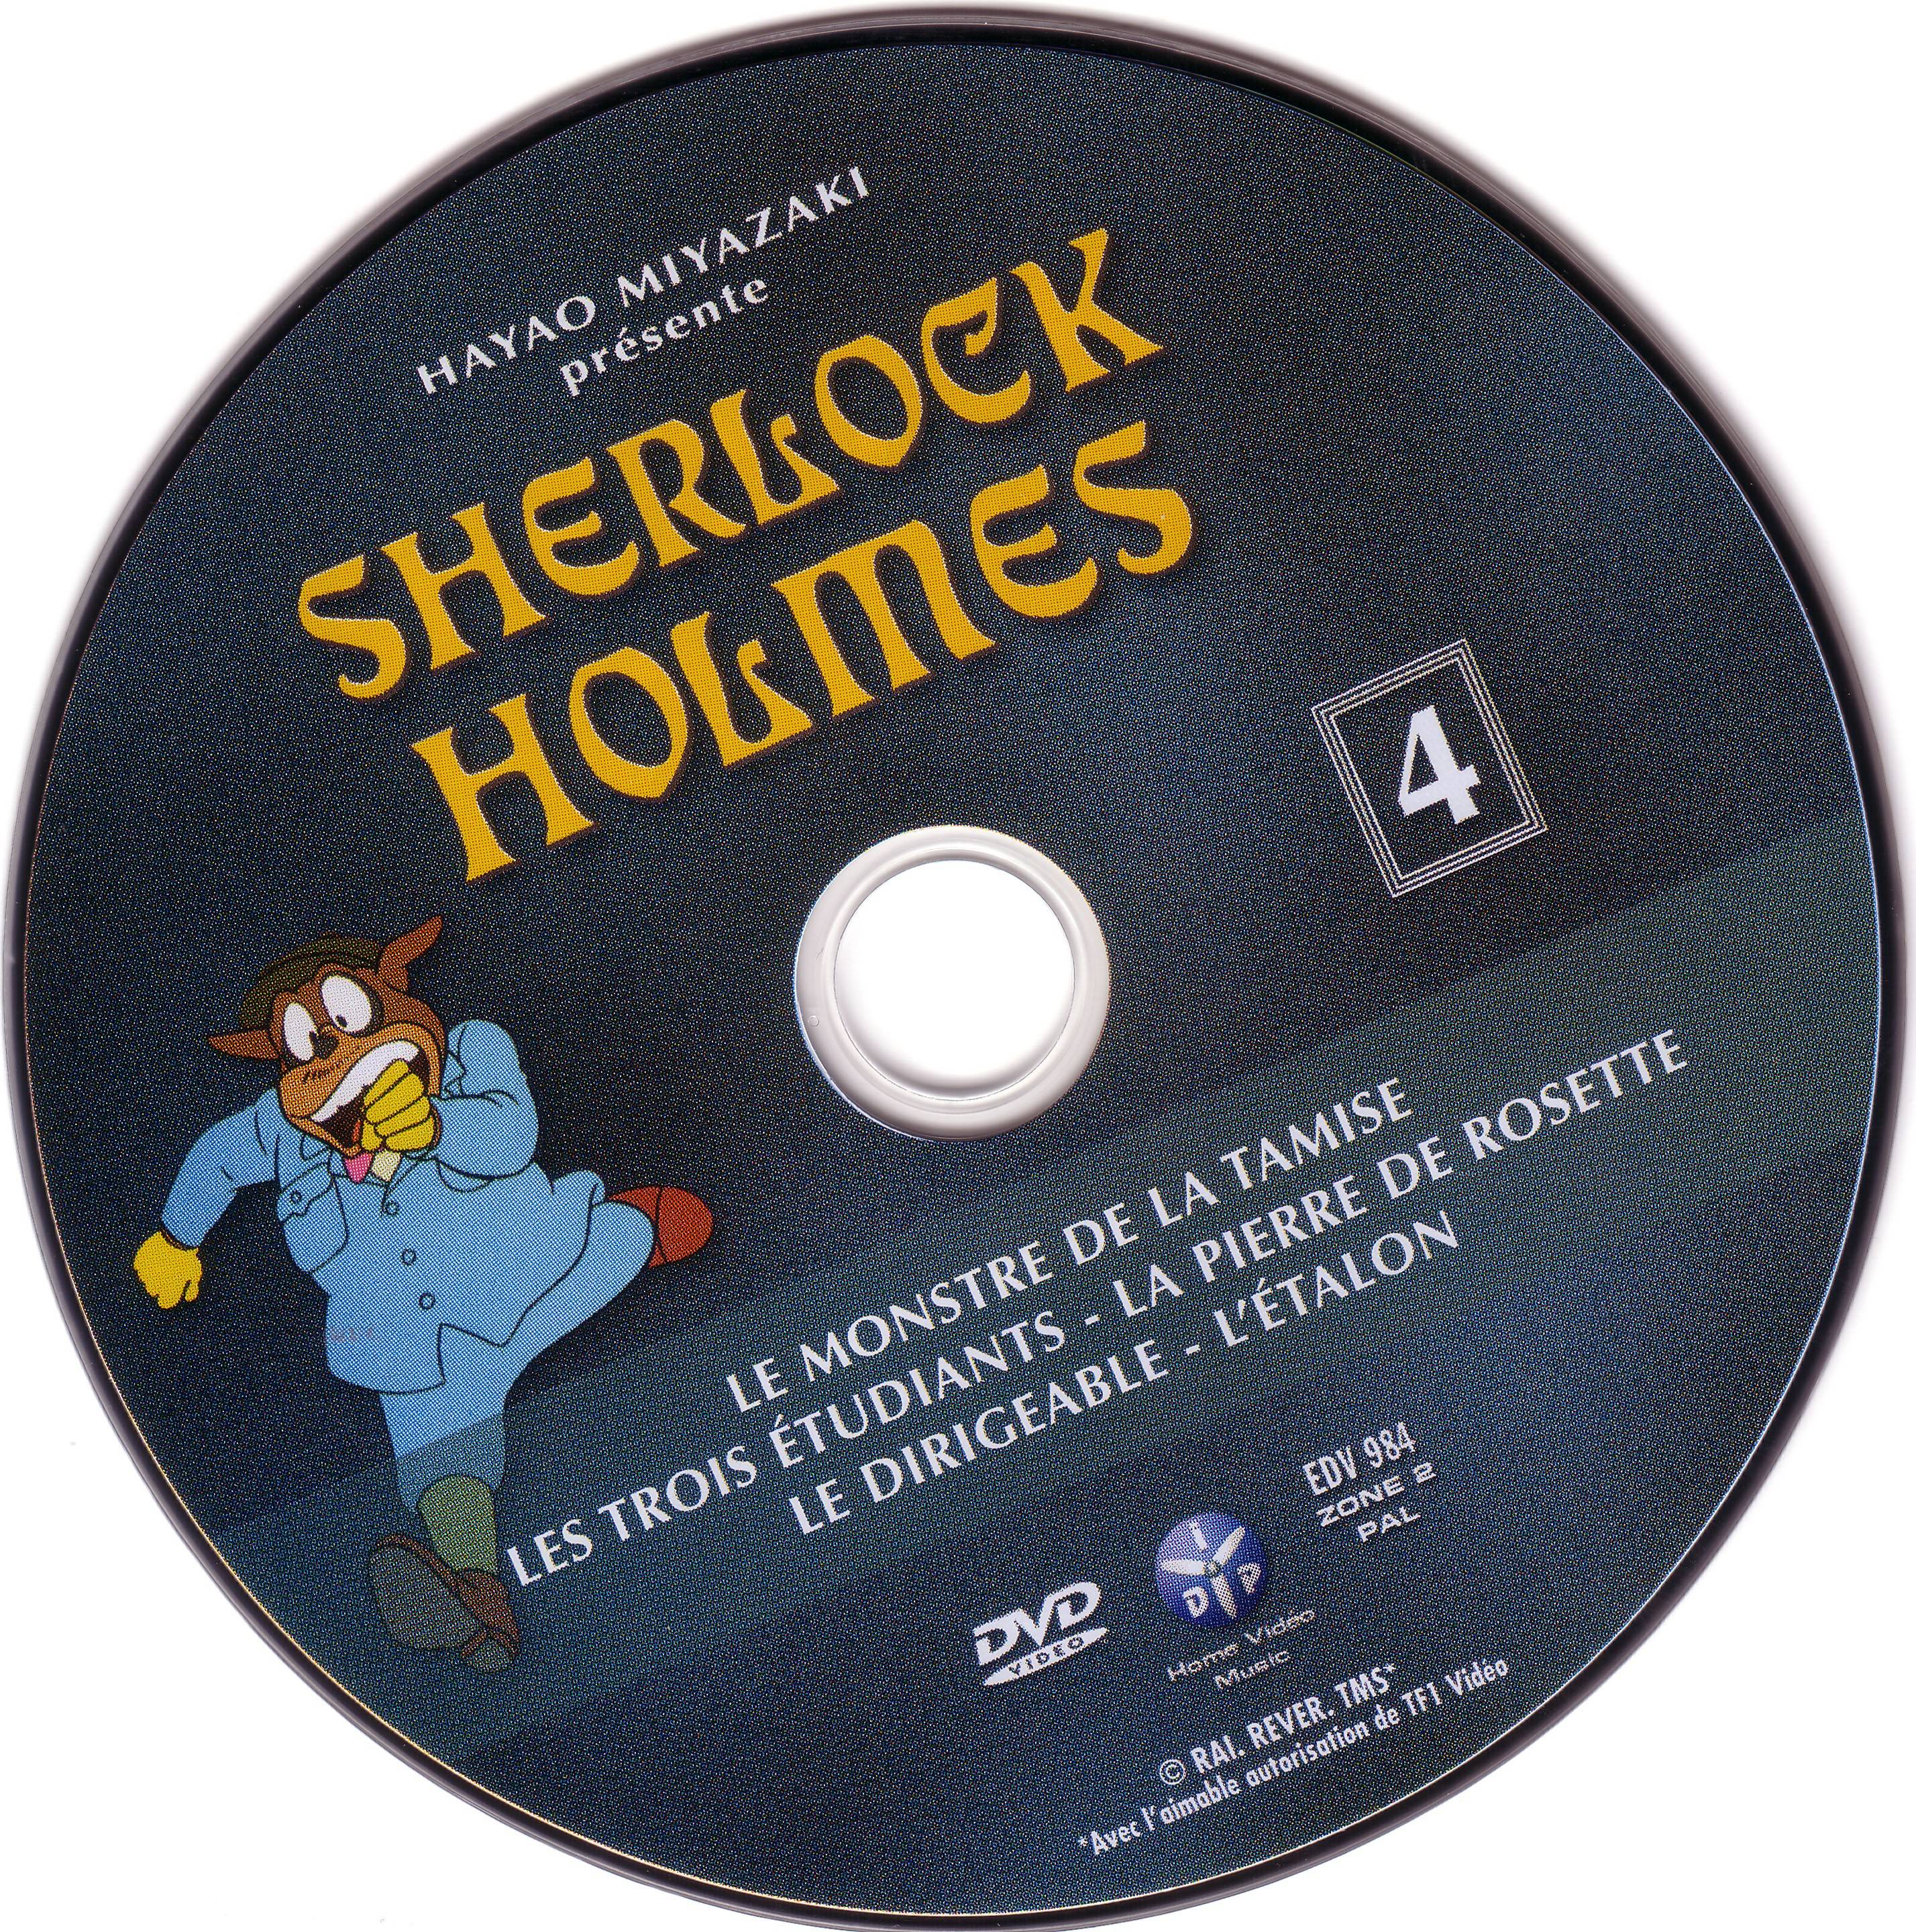 Sherlock Holmes vol 4